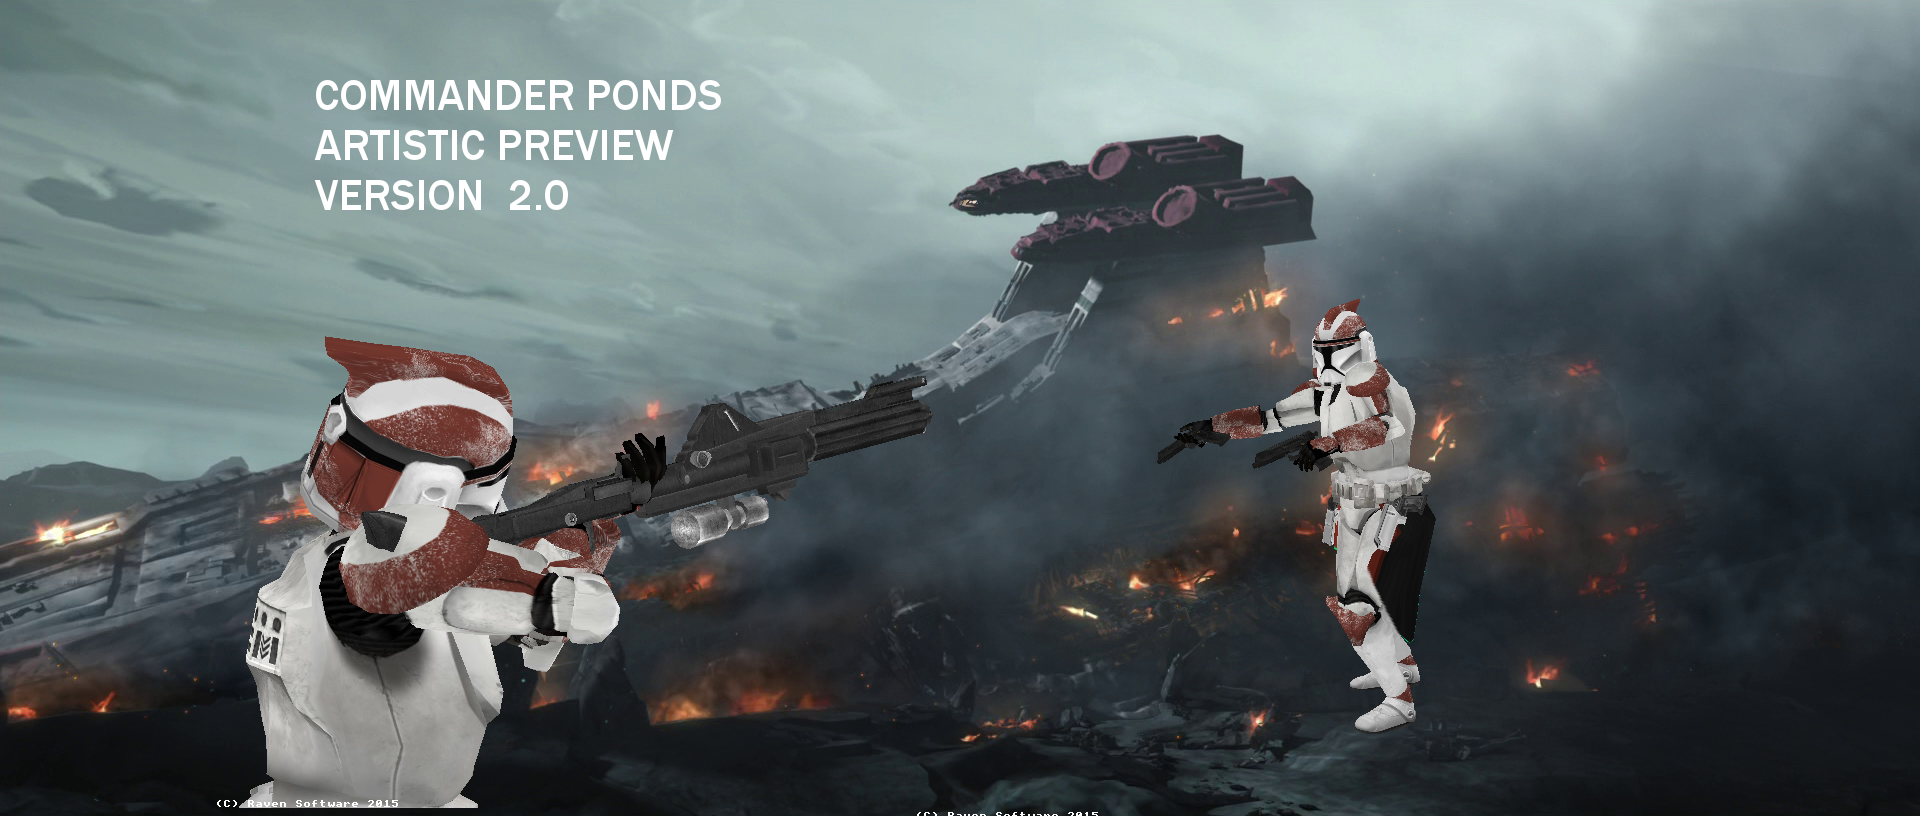 More information about "Commander Ponds 2.0"